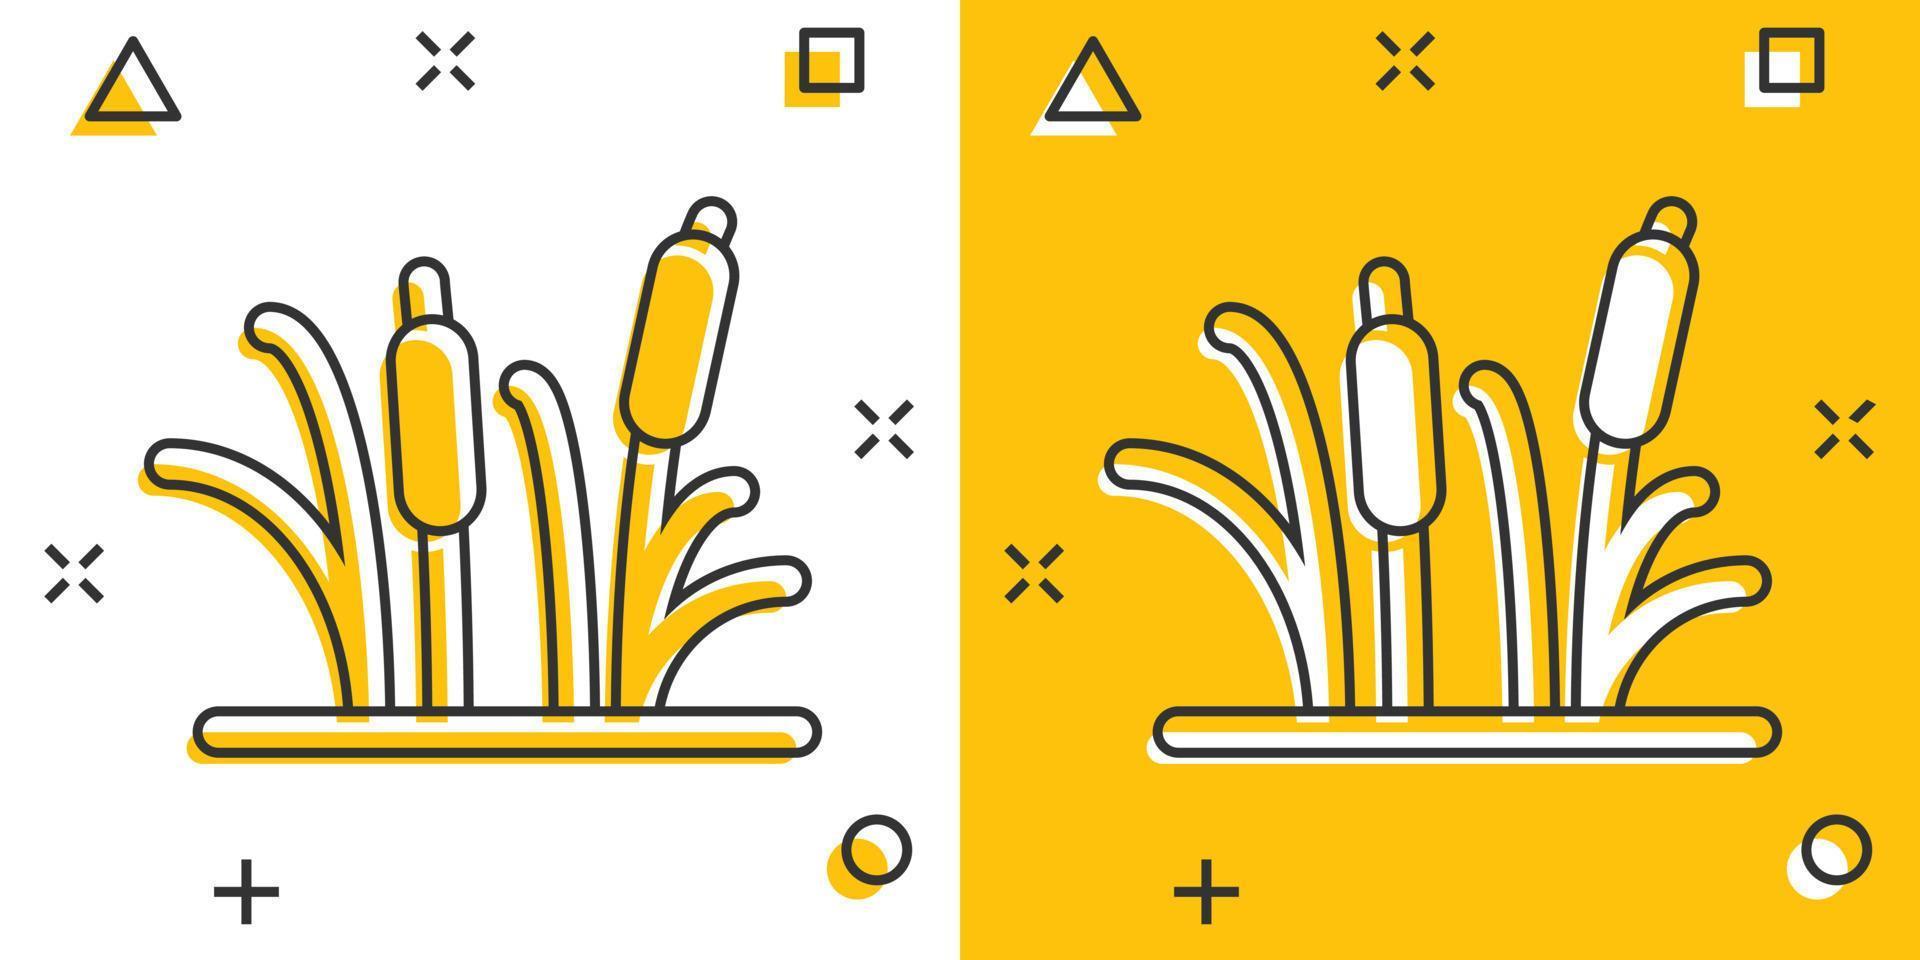 Schilf-Gras-Symbol im Comic-Stil. Binsensumpf Vektor Cartoon Illustration Piktogramm. Schilfblatt-Geschäftskonzept-Splash-Effekt.